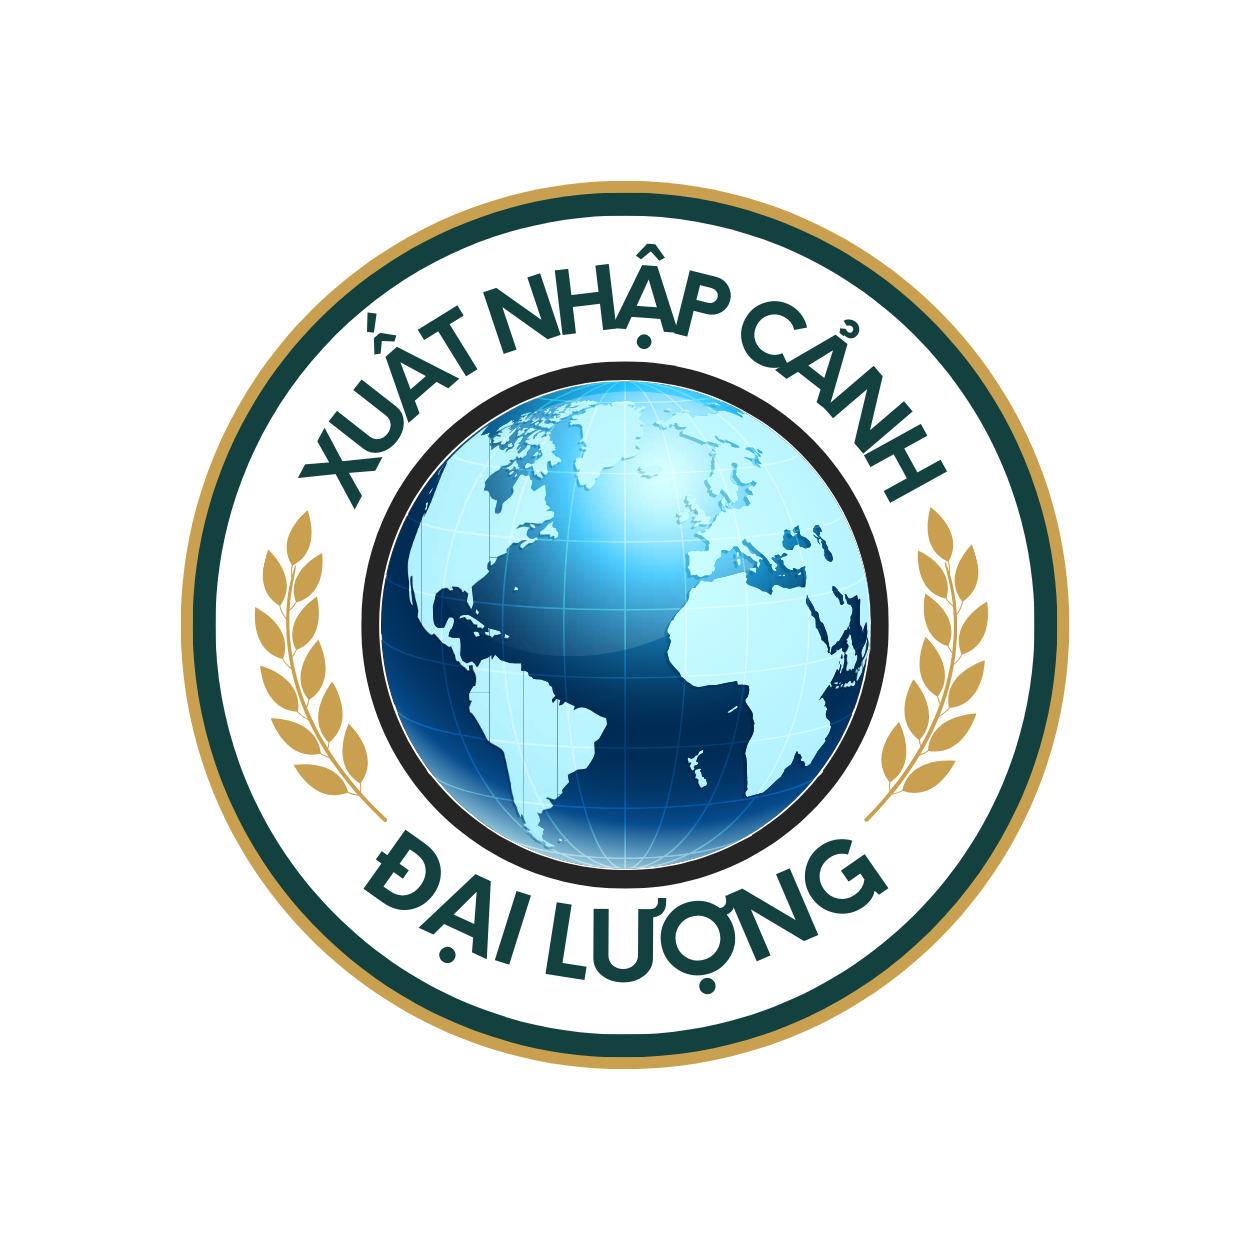 logo_xuat_nhap_canh_dai_luong